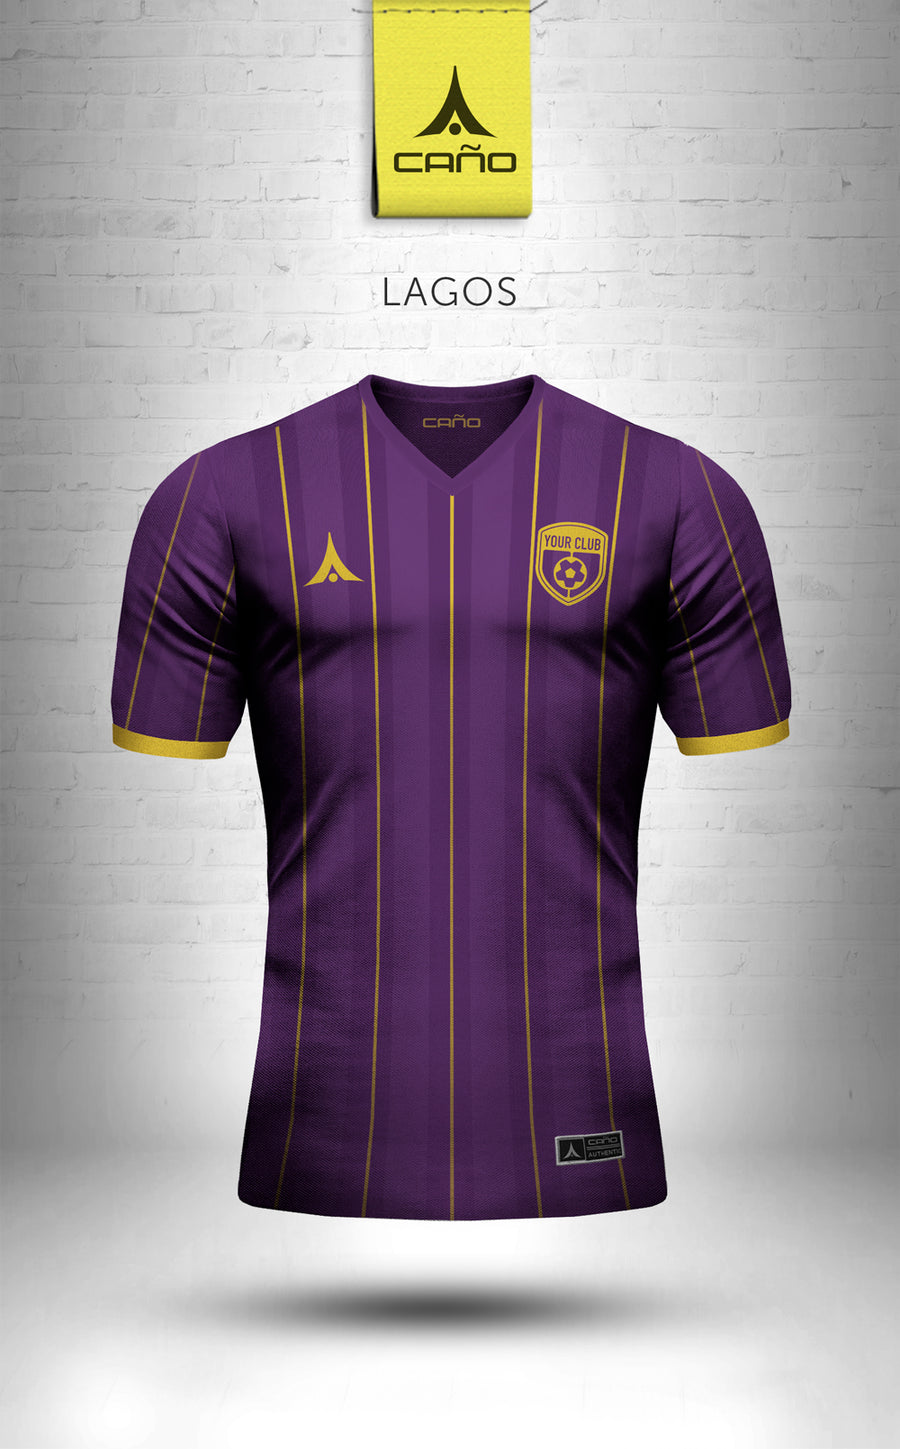 Lagos in purple/gold